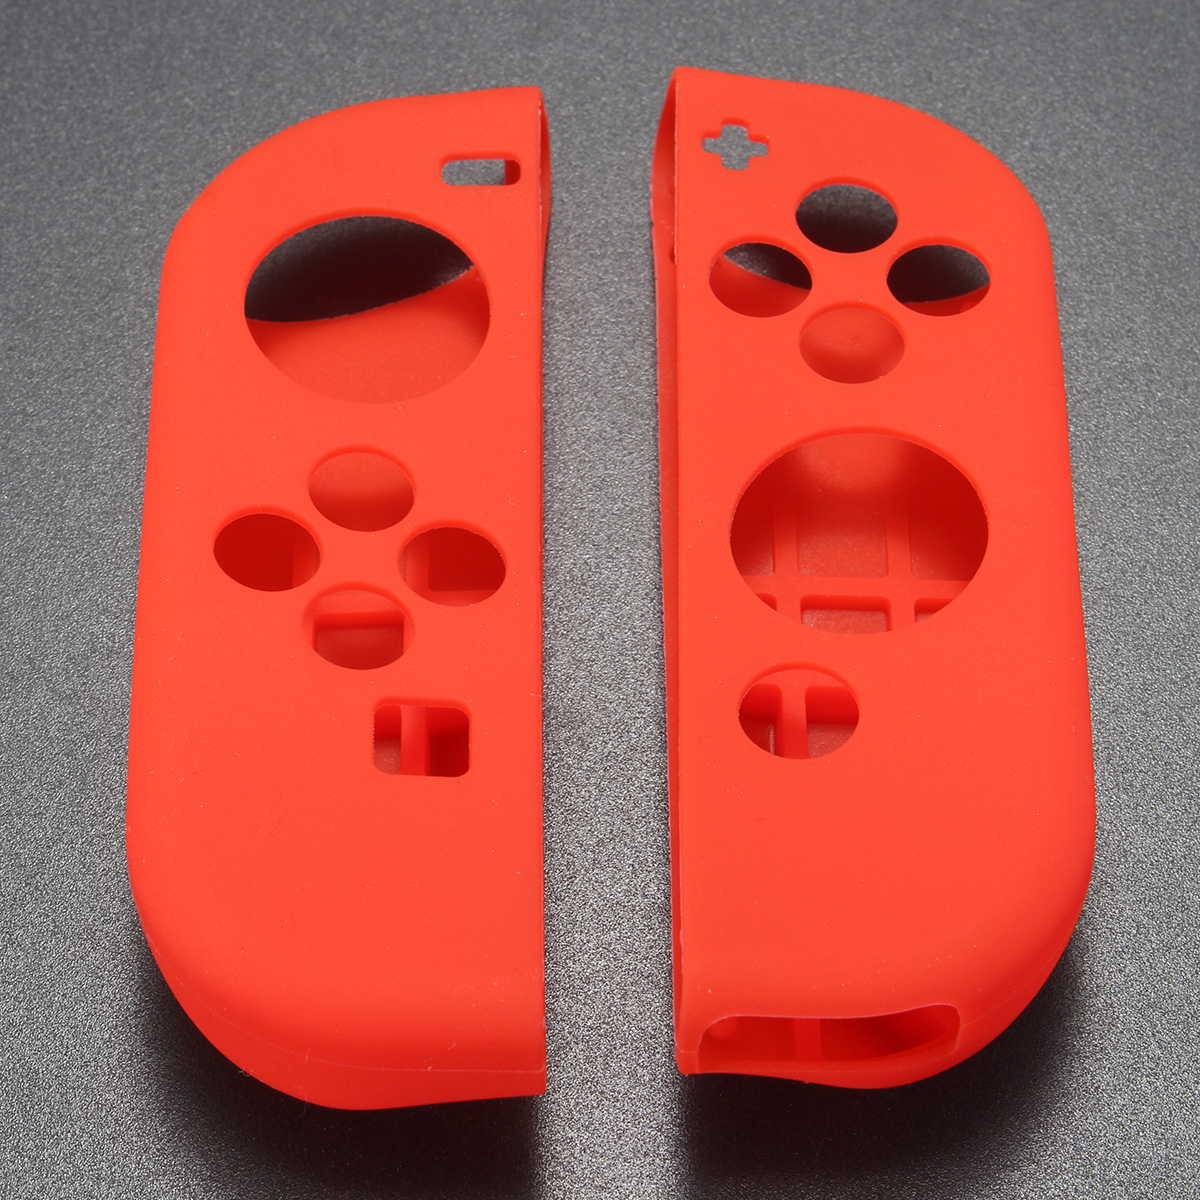 Silicon Case Protective Impact Resistant Rubber Skin Cover For Nintendo Switch Joy-Con Controller 9